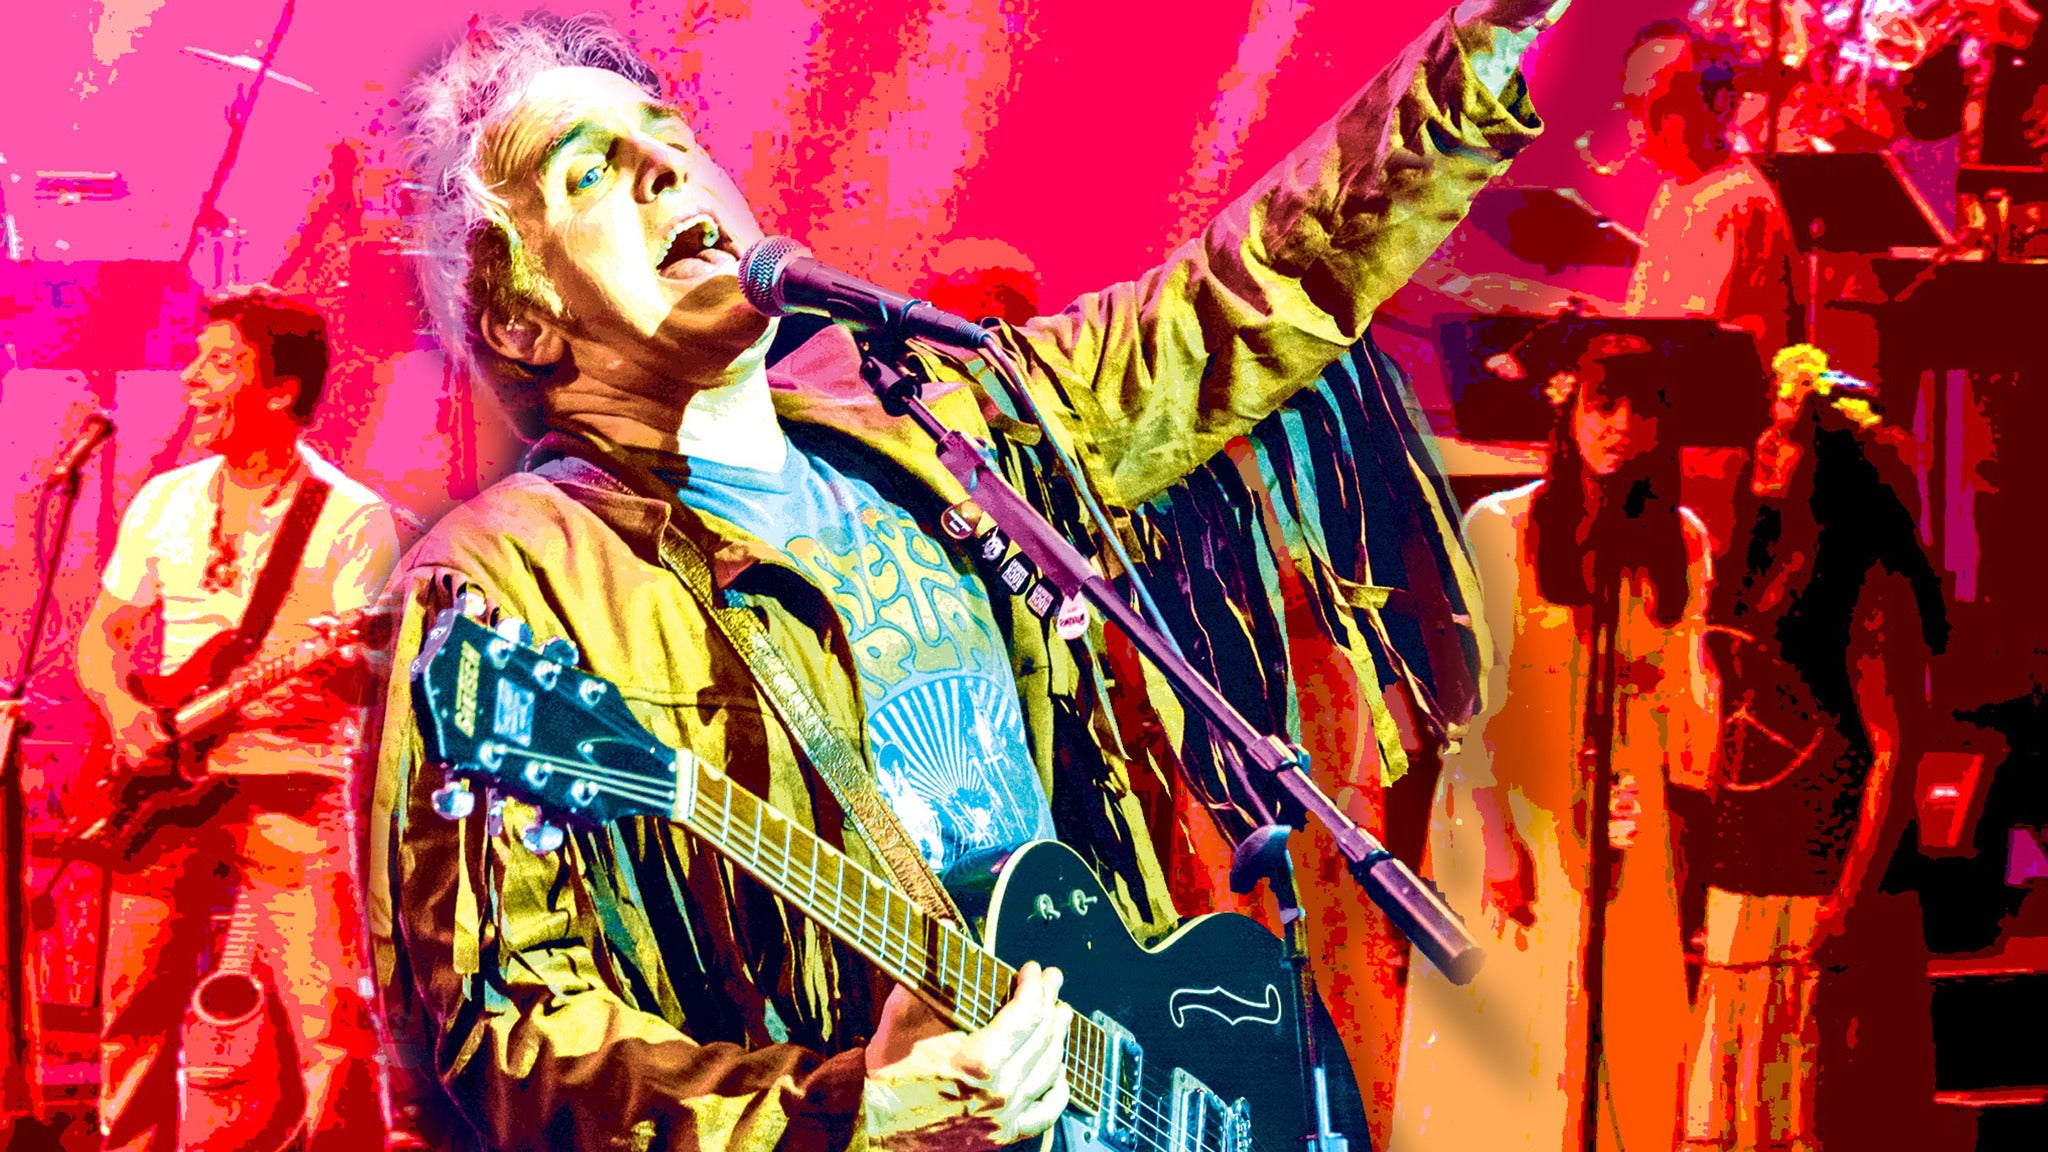 Glen Burtnik's Summer of Love Concert Music of Woodstock in Nashville promo photo for Ticketmaster presale offer code